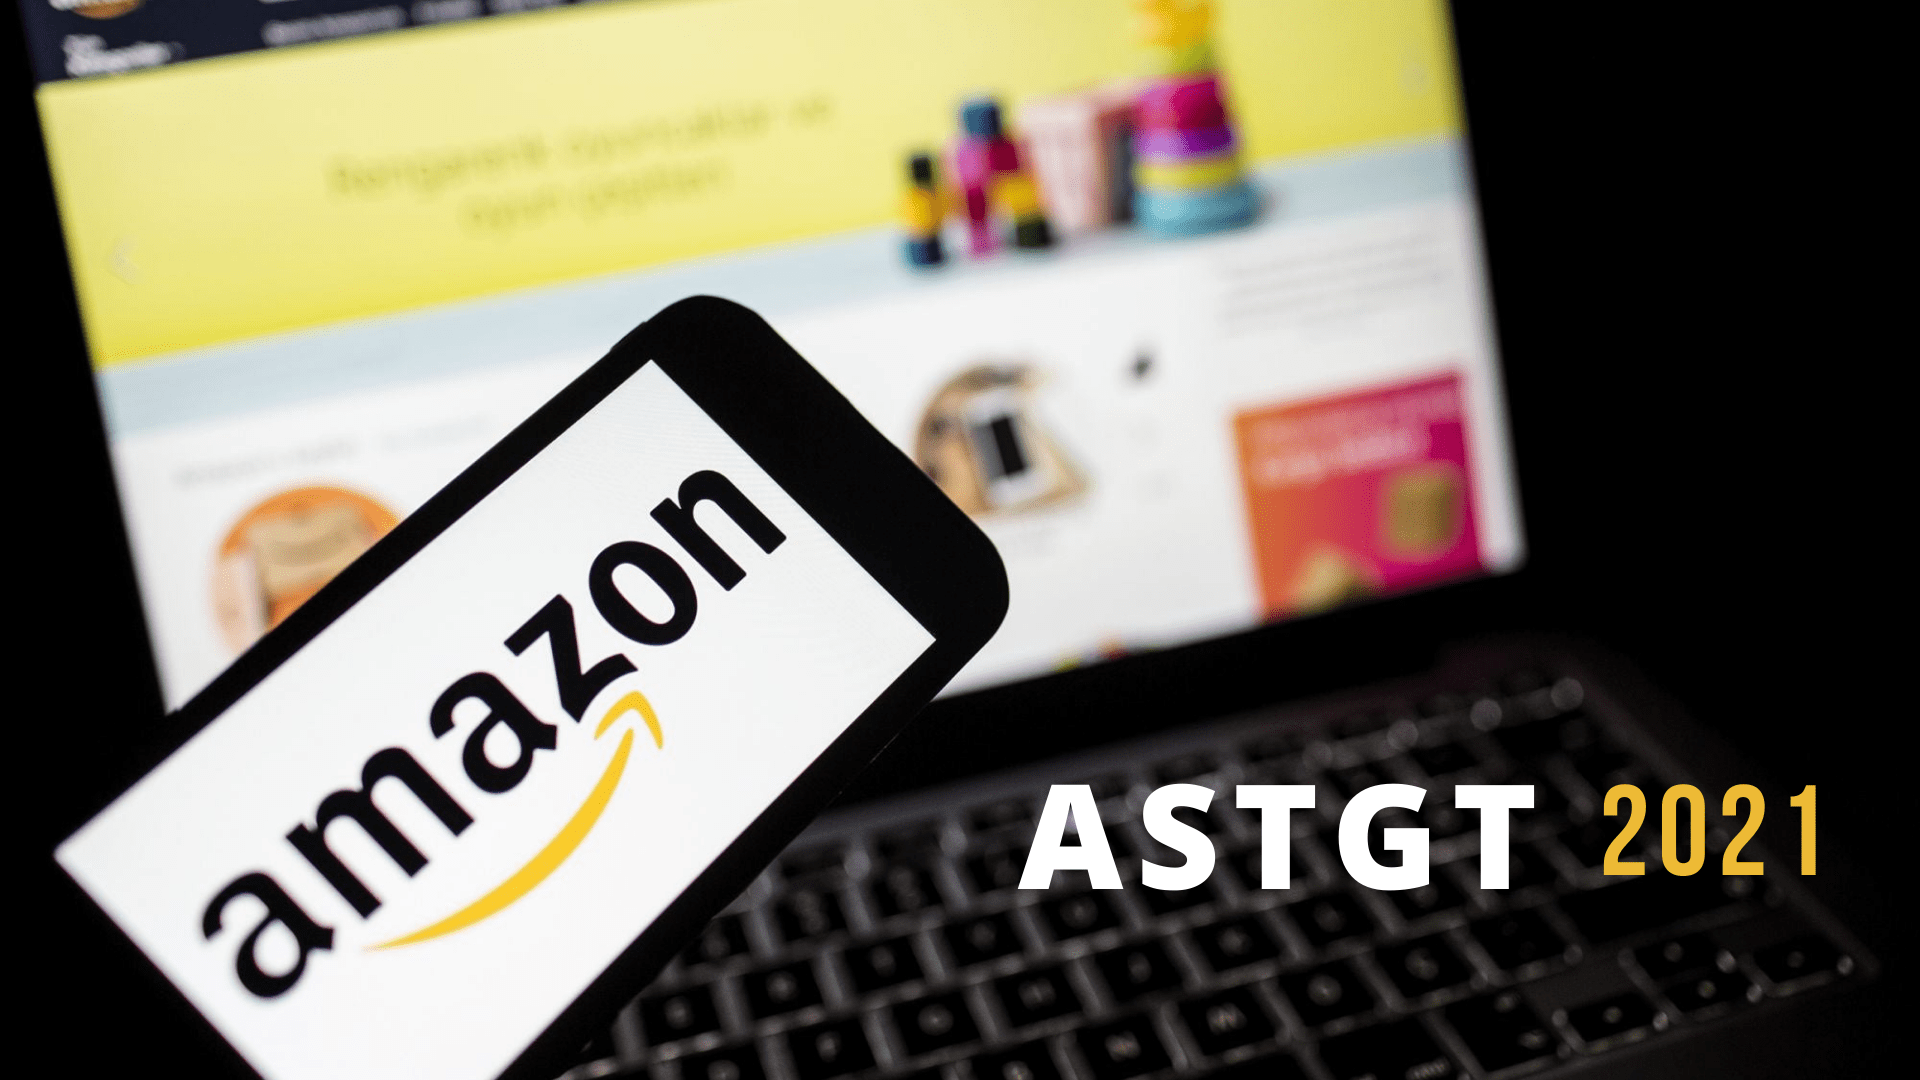 Amazon-Verkaufsveranstaltung: E-Commerce Post Covid